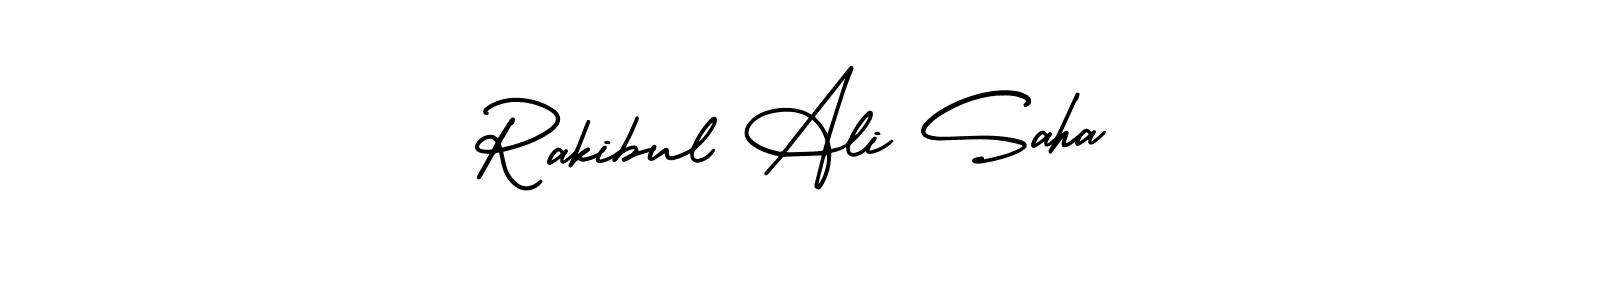 Design your own signature with our free online signature maker. With this signature software, you can create a handwritten (AmerikaSignatureDemo-Regular) signature for name Rakibul Ali Saha. Rakibul Ali Saha signature style 3 images and pictures png